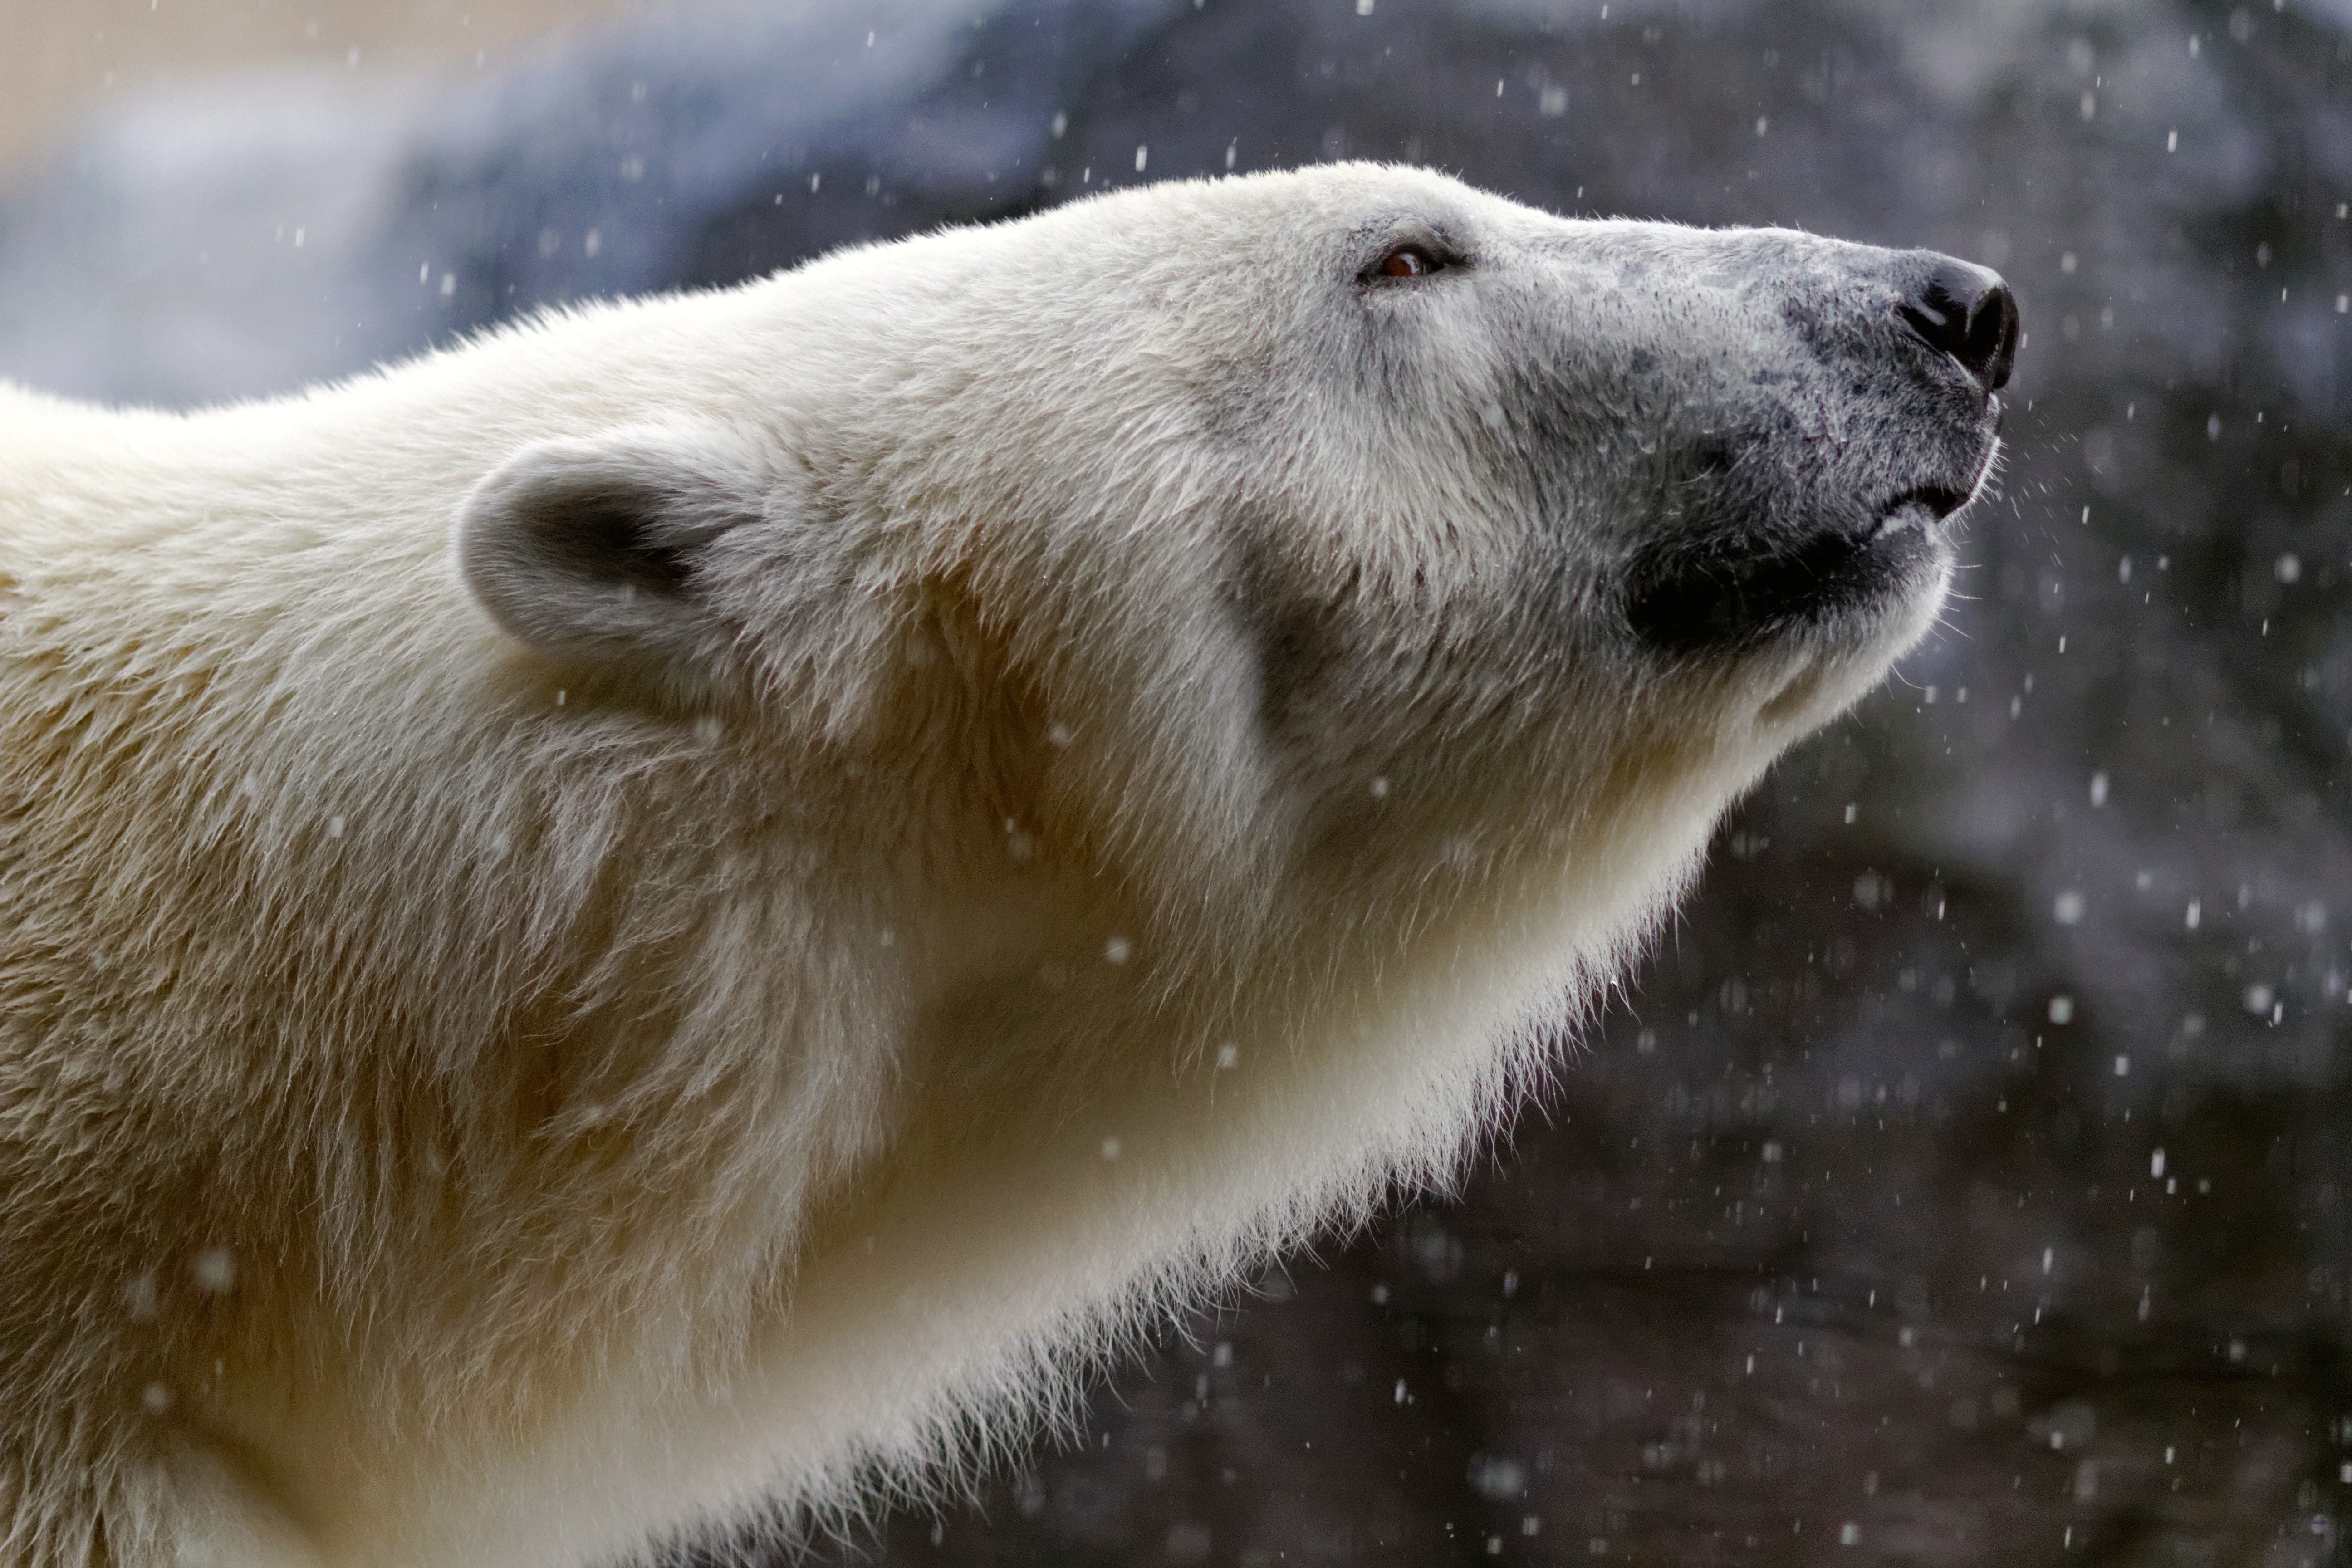 Wallpapers animals wildlife polar bears on the desktop